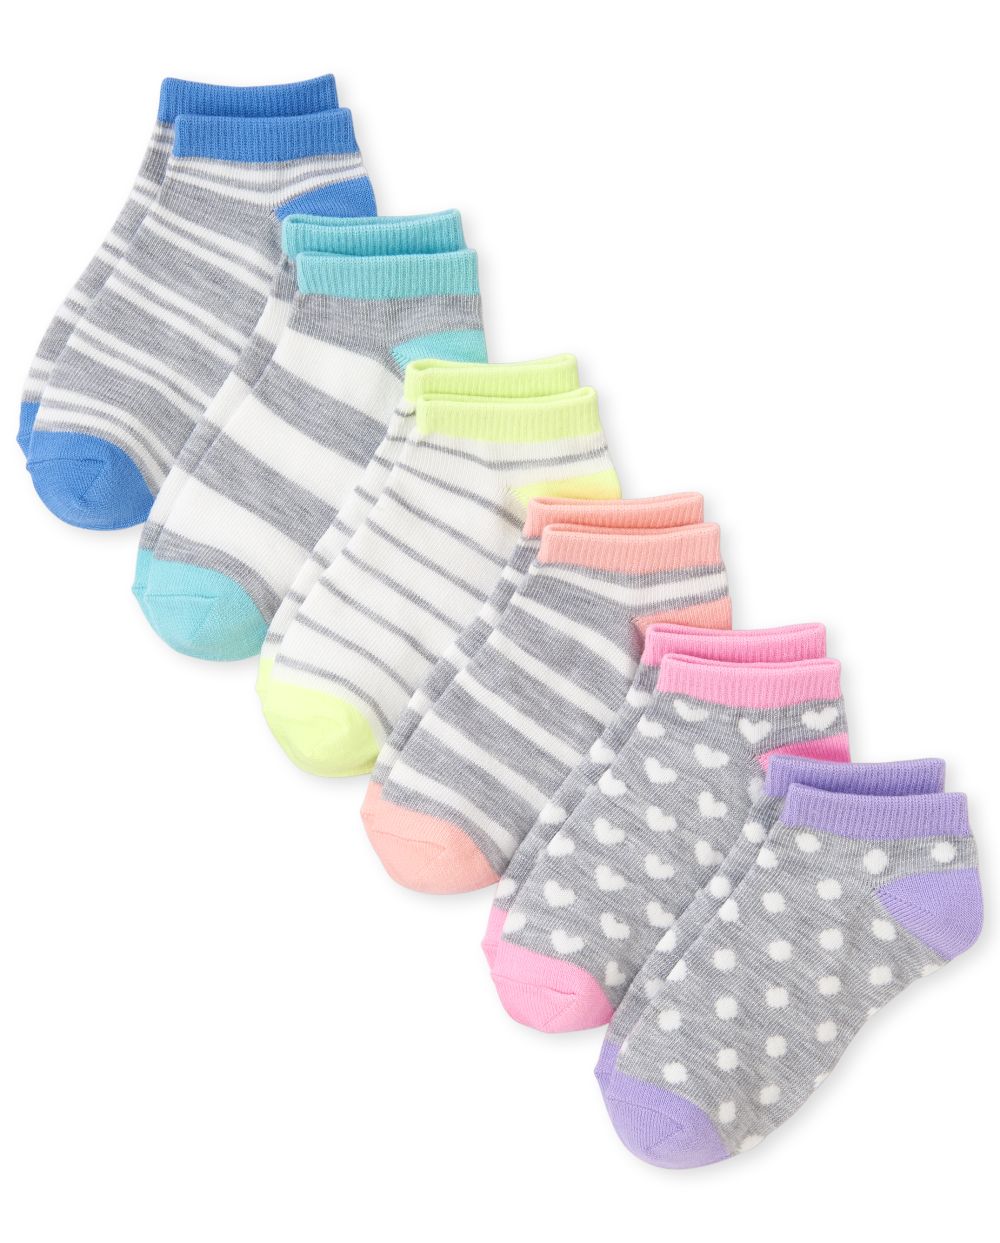 Girls Striped Ankle Socks 6-Pack